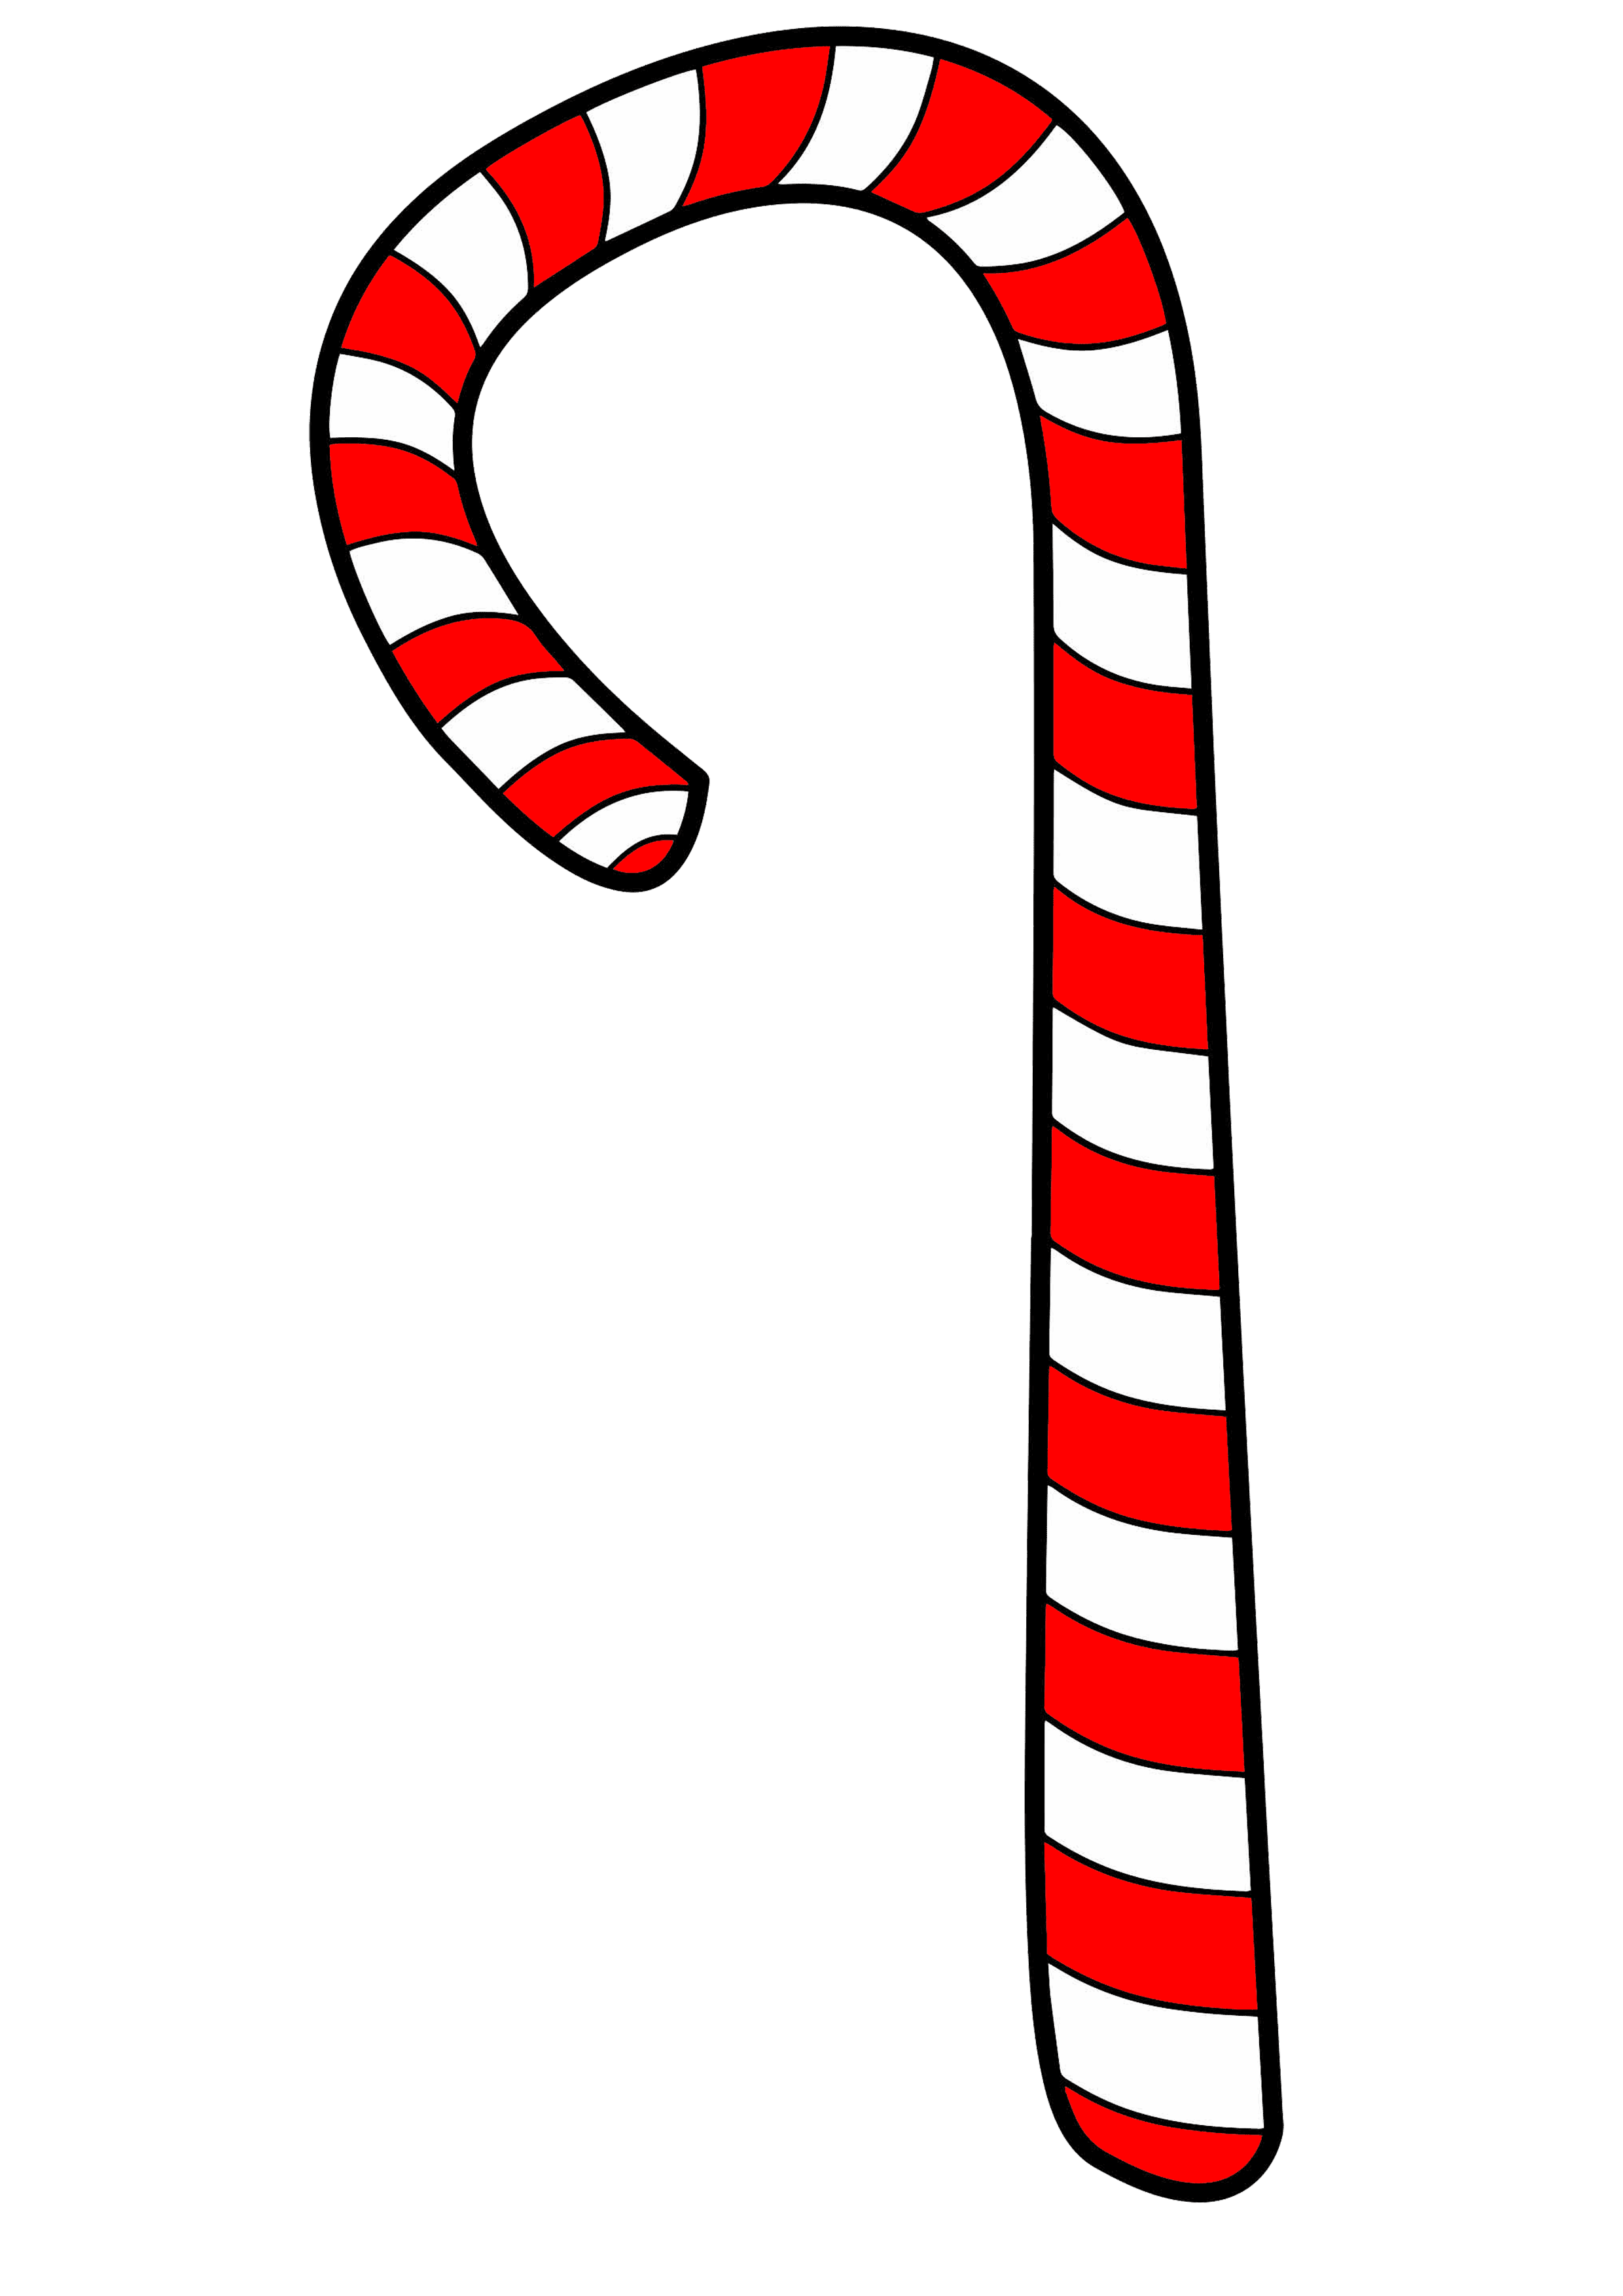 Stick candy Candy cane Clip art - weihnachten clipart png download ...